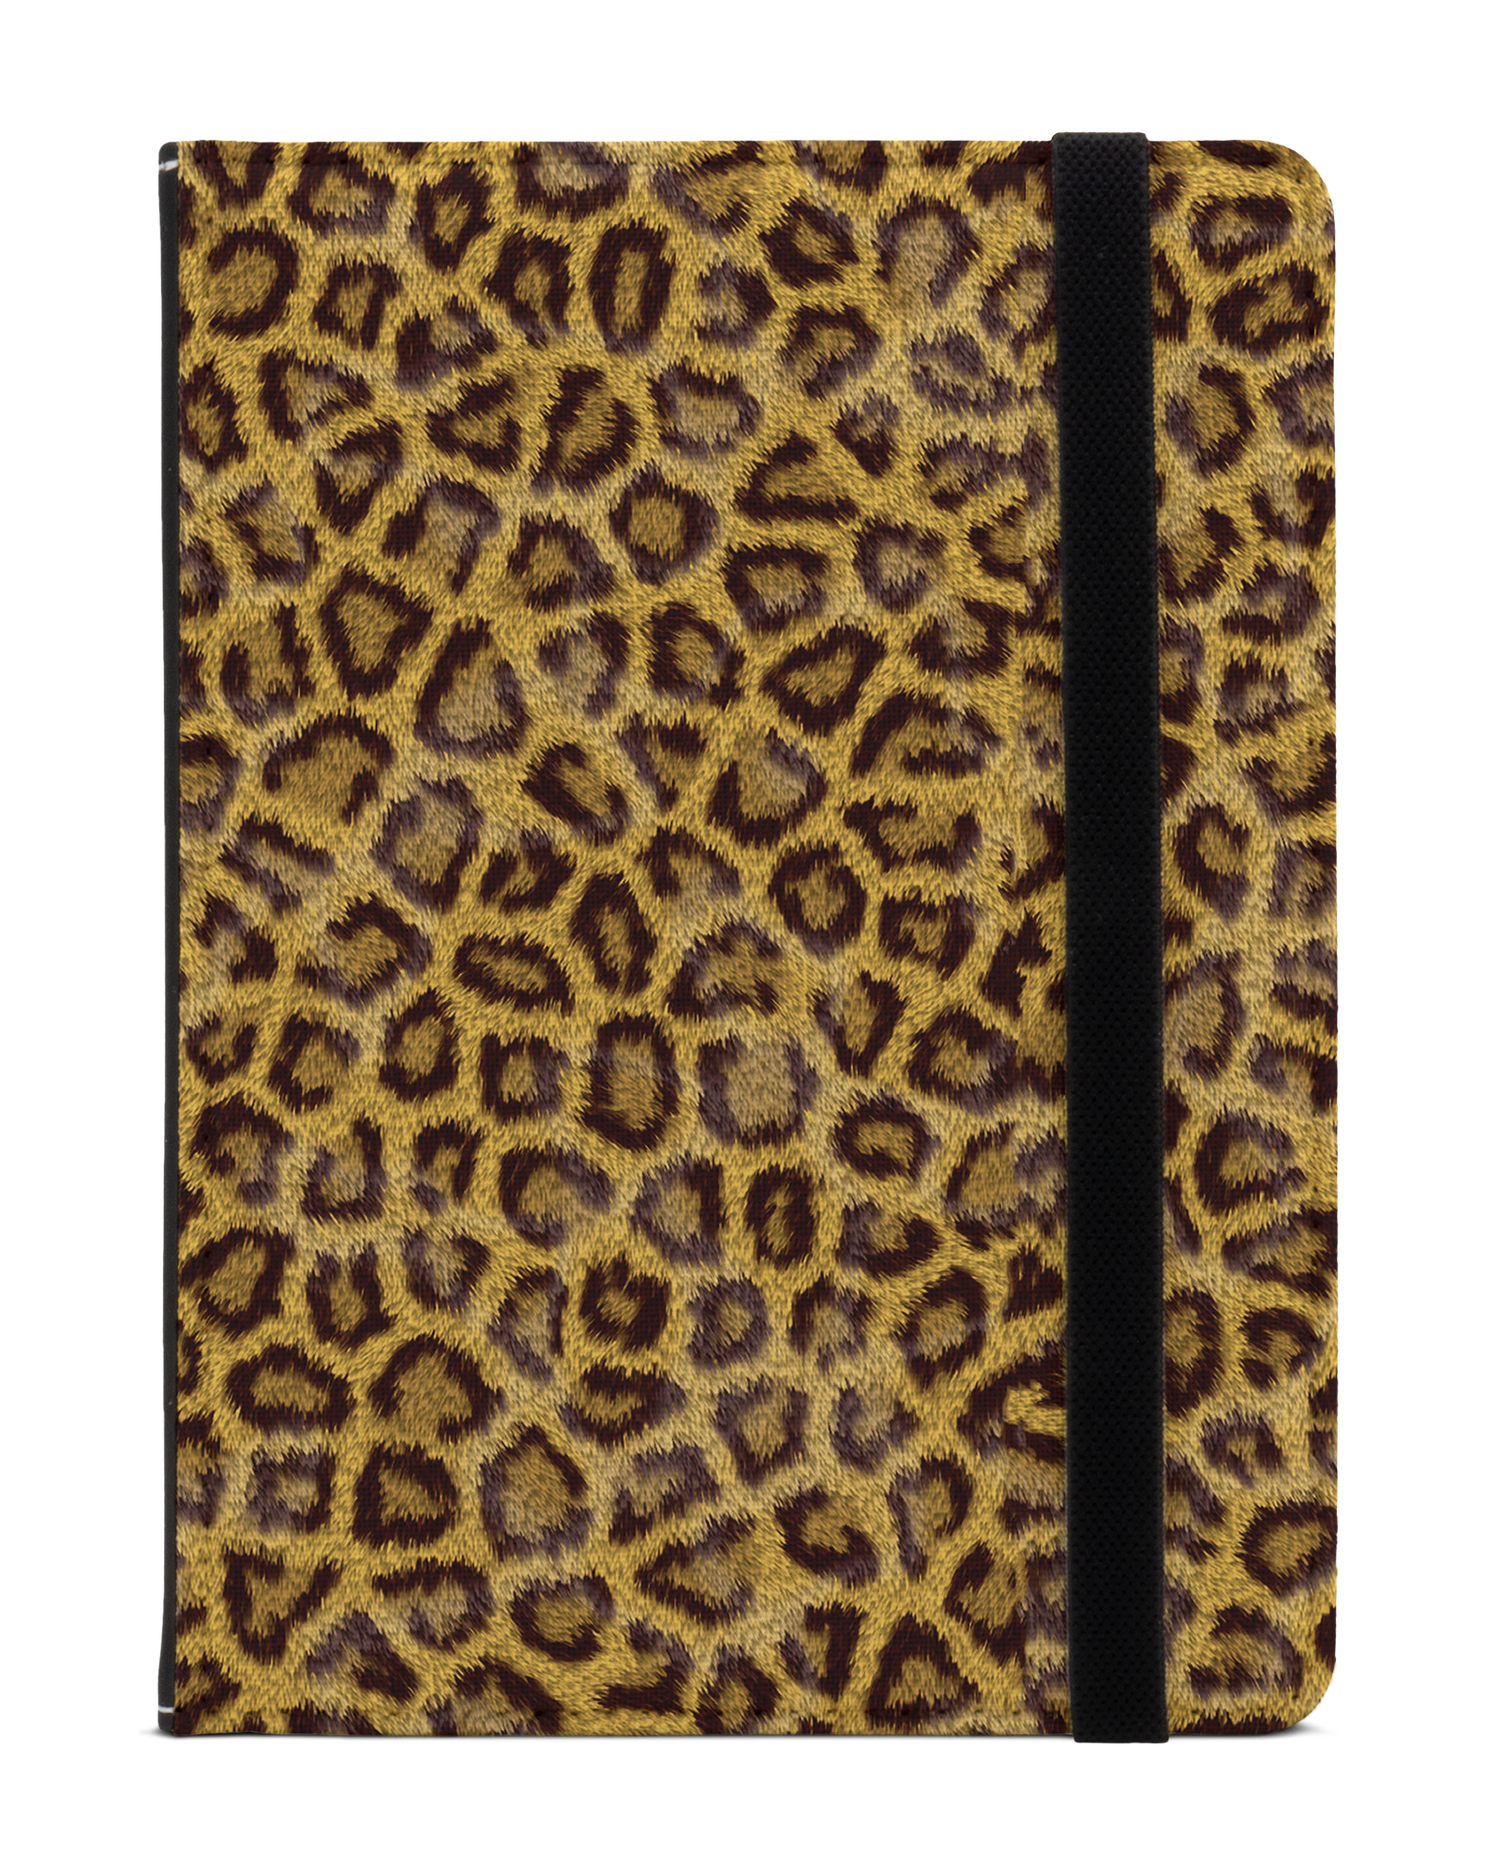 Leopard Skin eBook Reader Hülle XS: Frontansicht